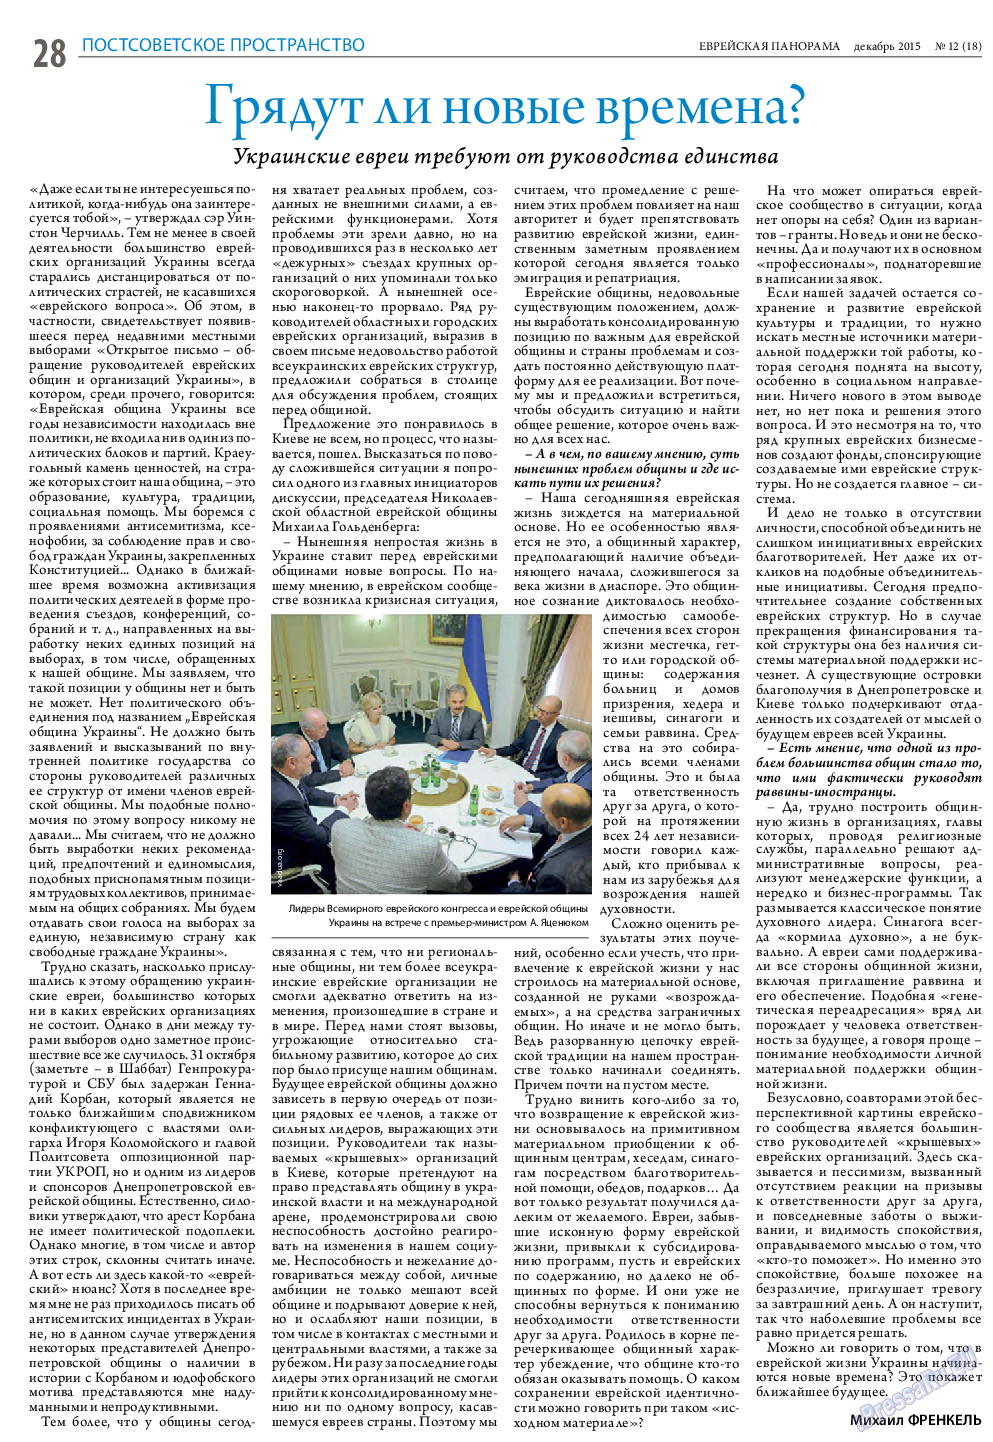 Еврейская панорама, газета. 2015 №12 стр.28